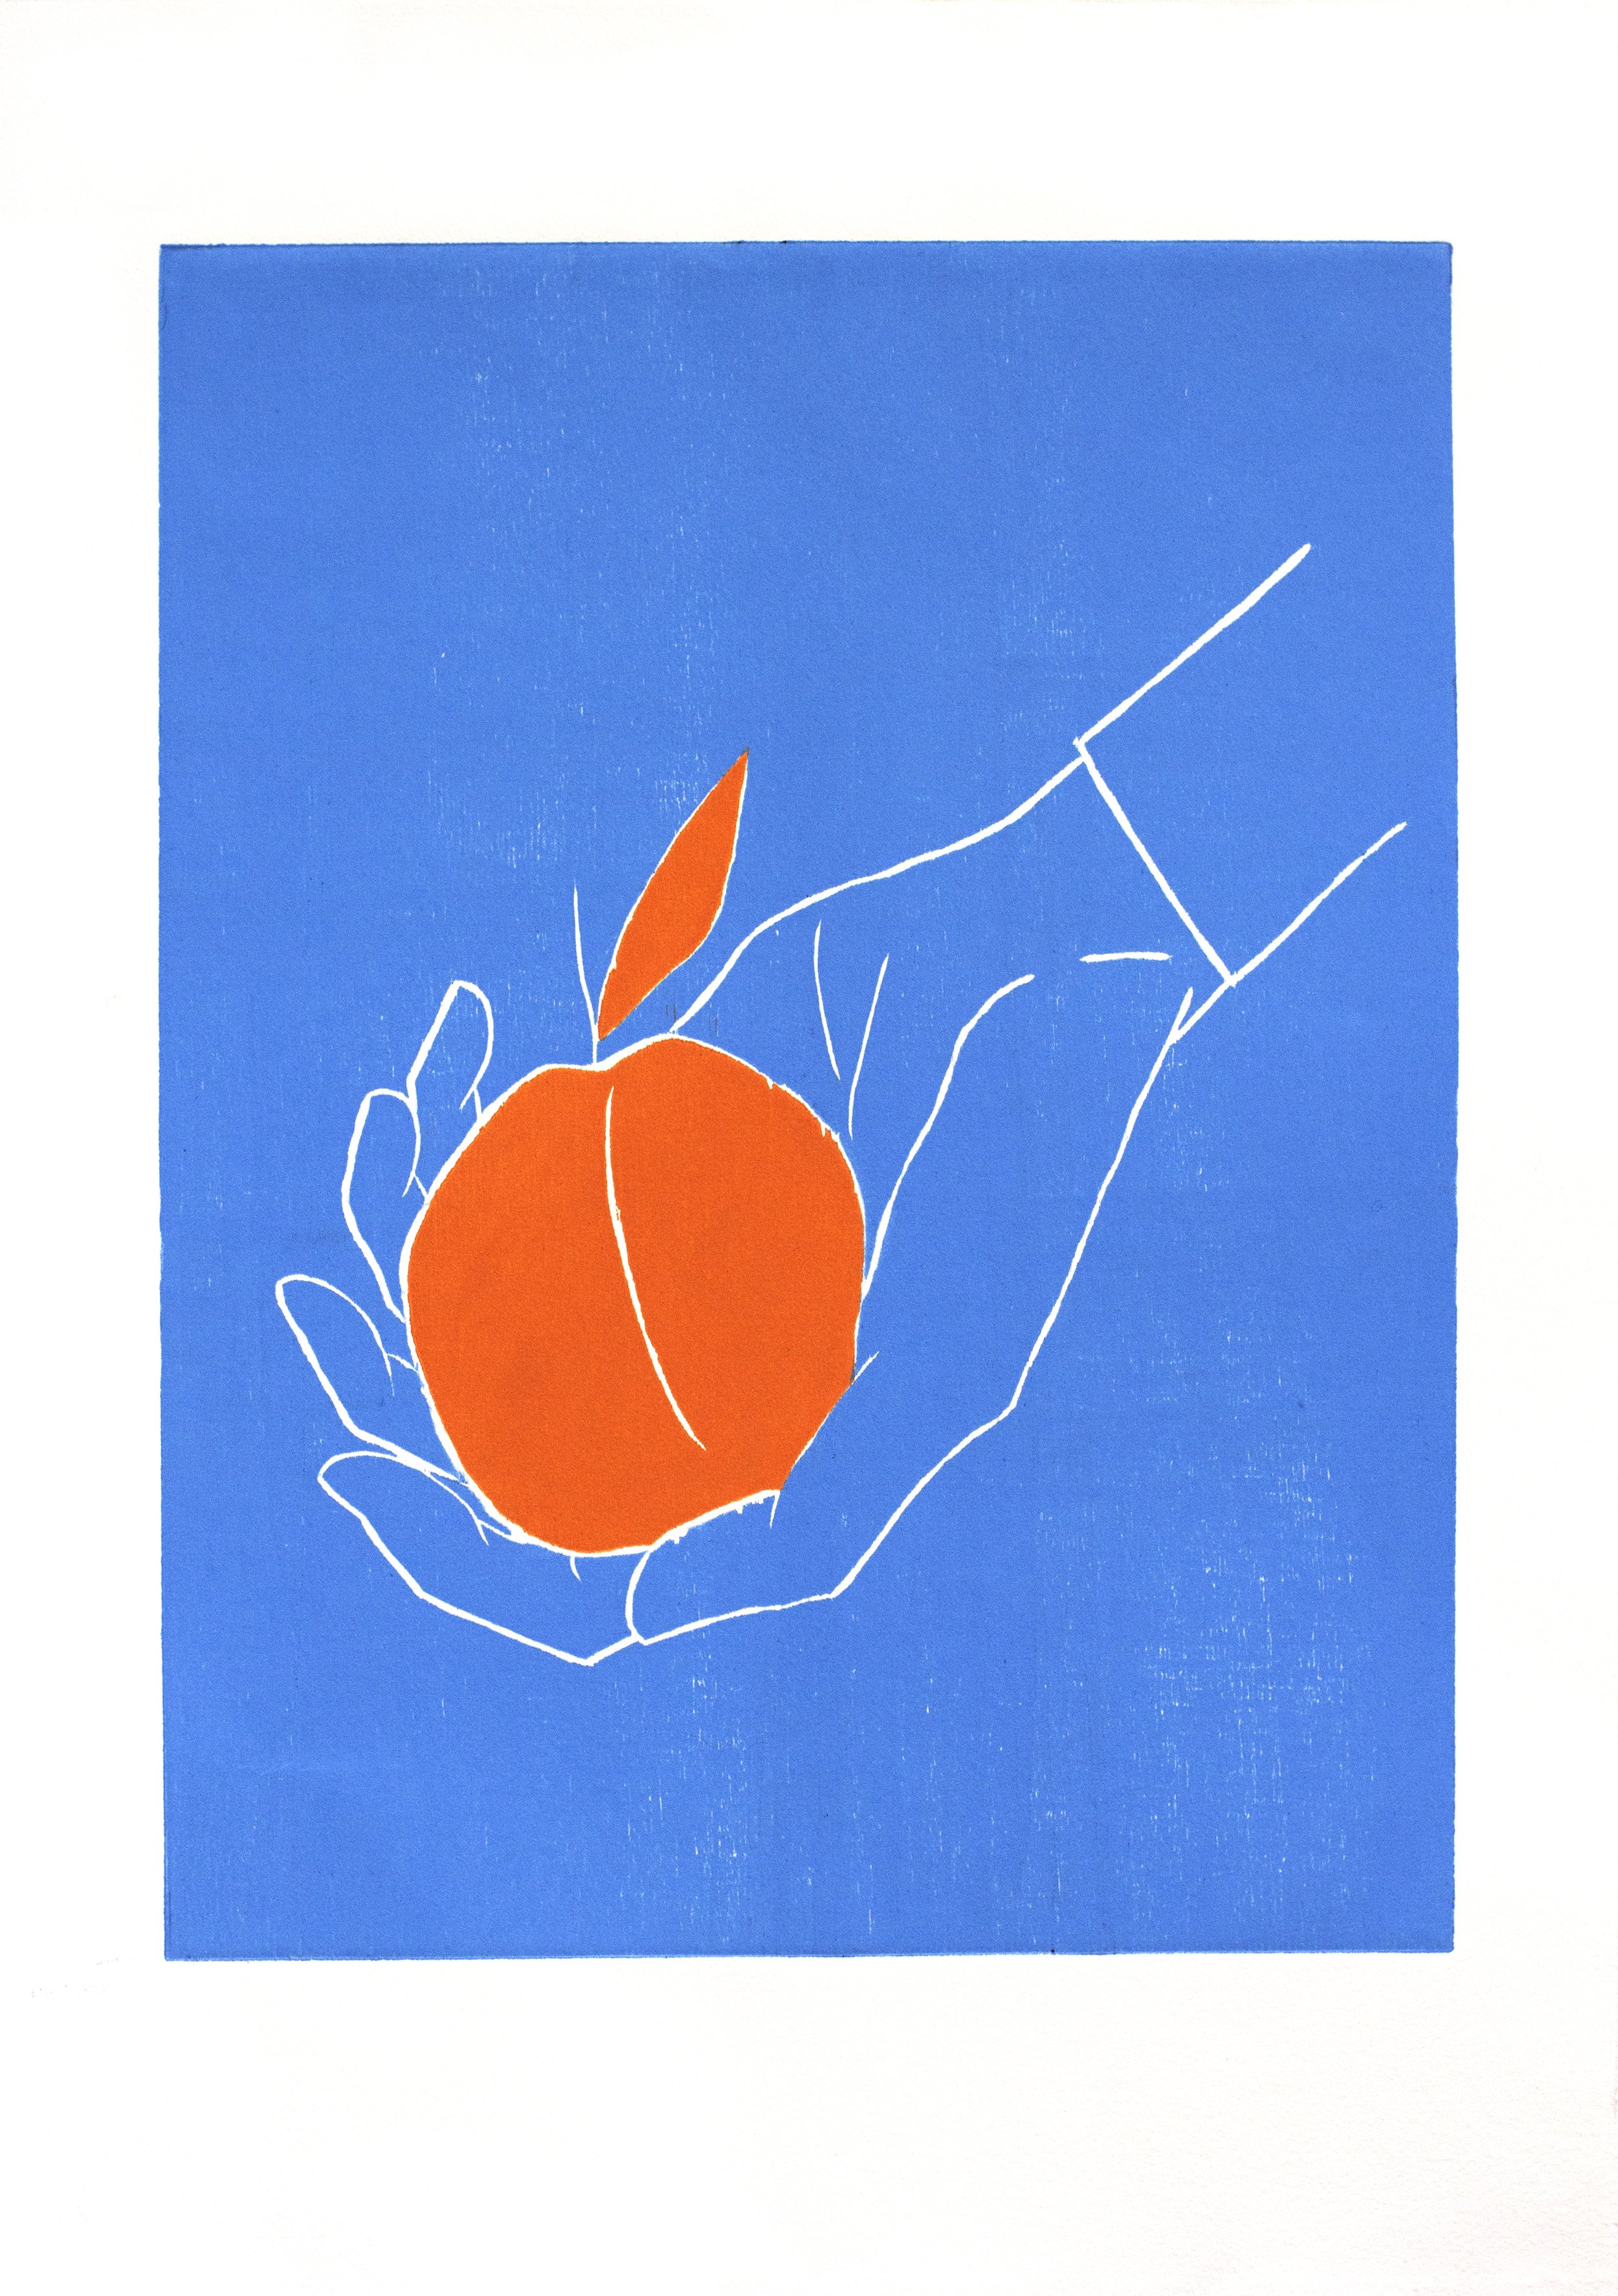  It’s Not a Poison Apple I Promise  39 x 53 cm  woodcut  2019 